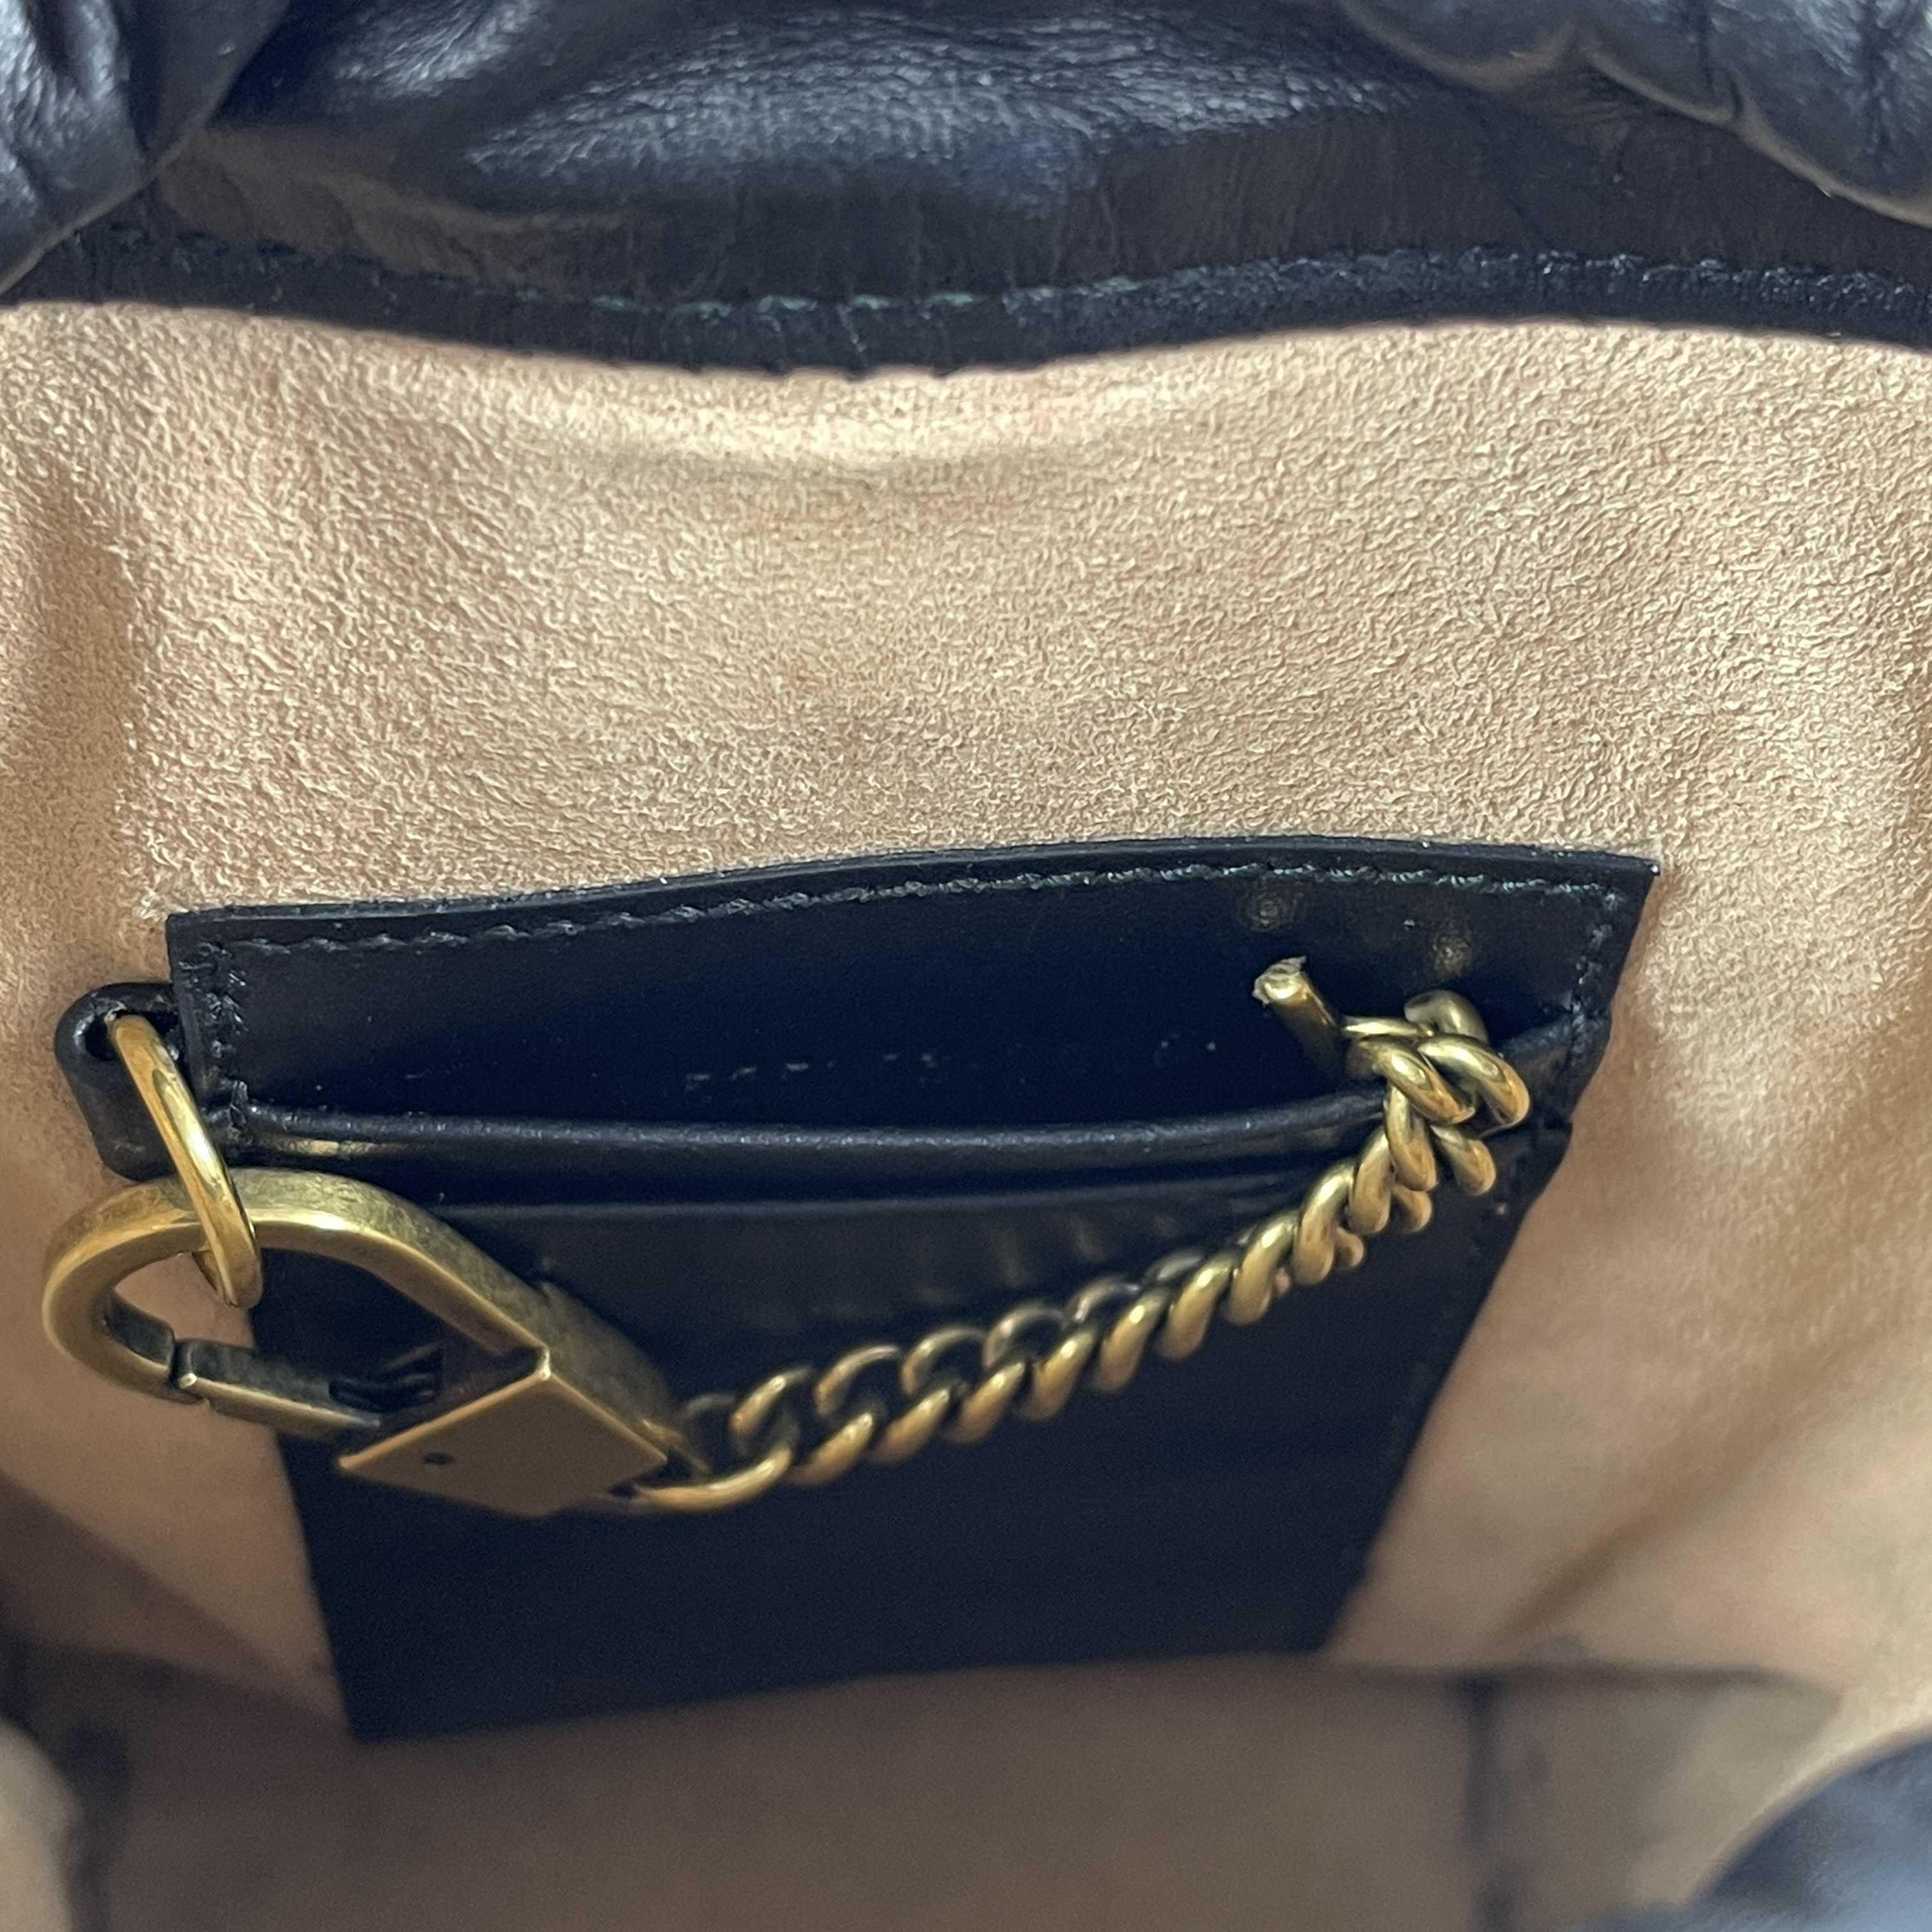 Gucci - Very Good - GG Marmont Bucket Bag Mini - Black - Handbag 10